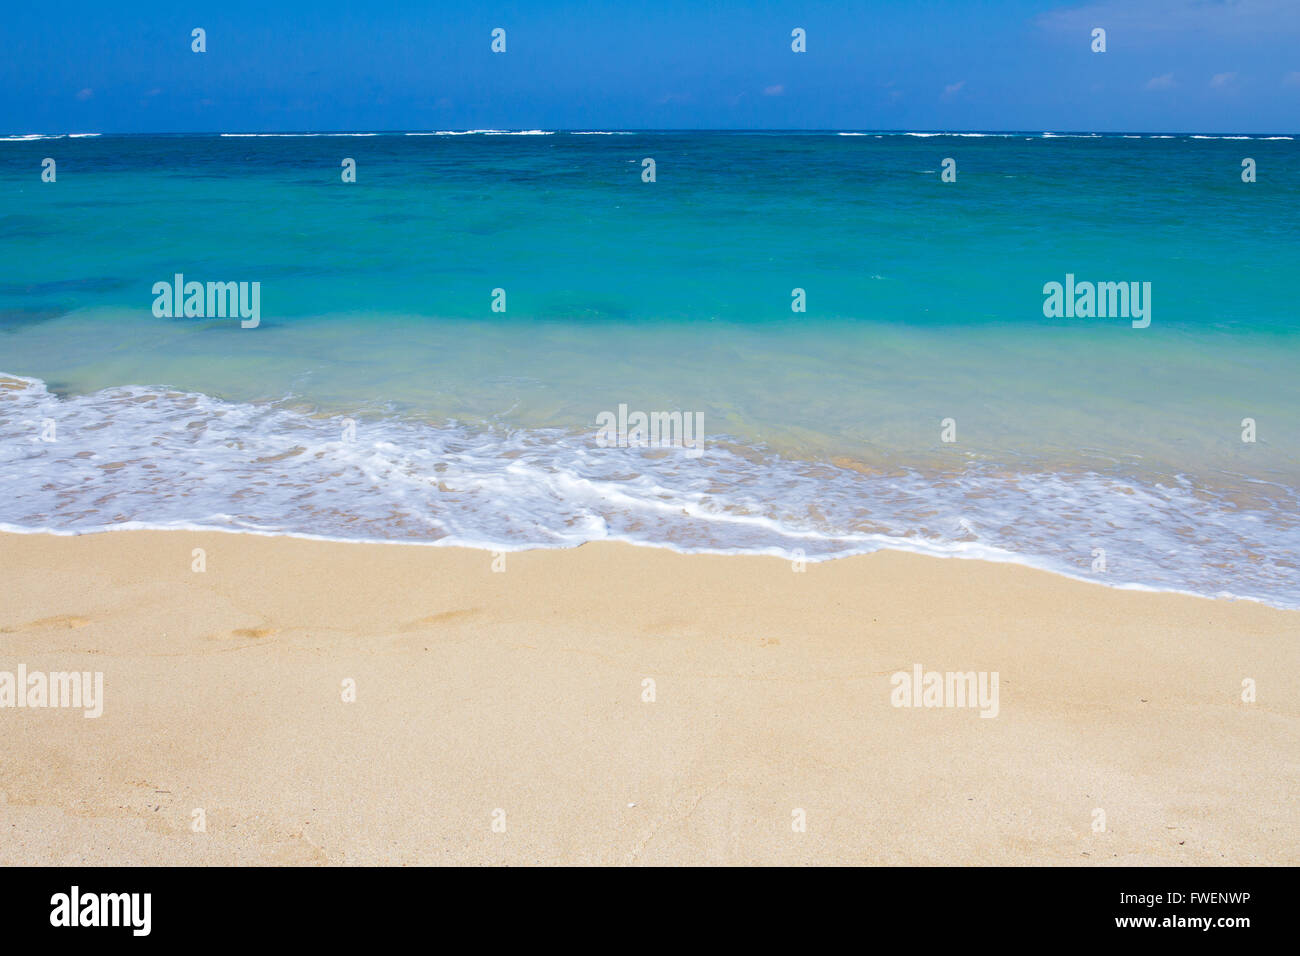 Bella tropical blu verde acqua e una spiaggia di sabbia bianca sulla costa nord di Oahu nelle Hawaii. Questa immagine mostra parad tropicale Foto Stock